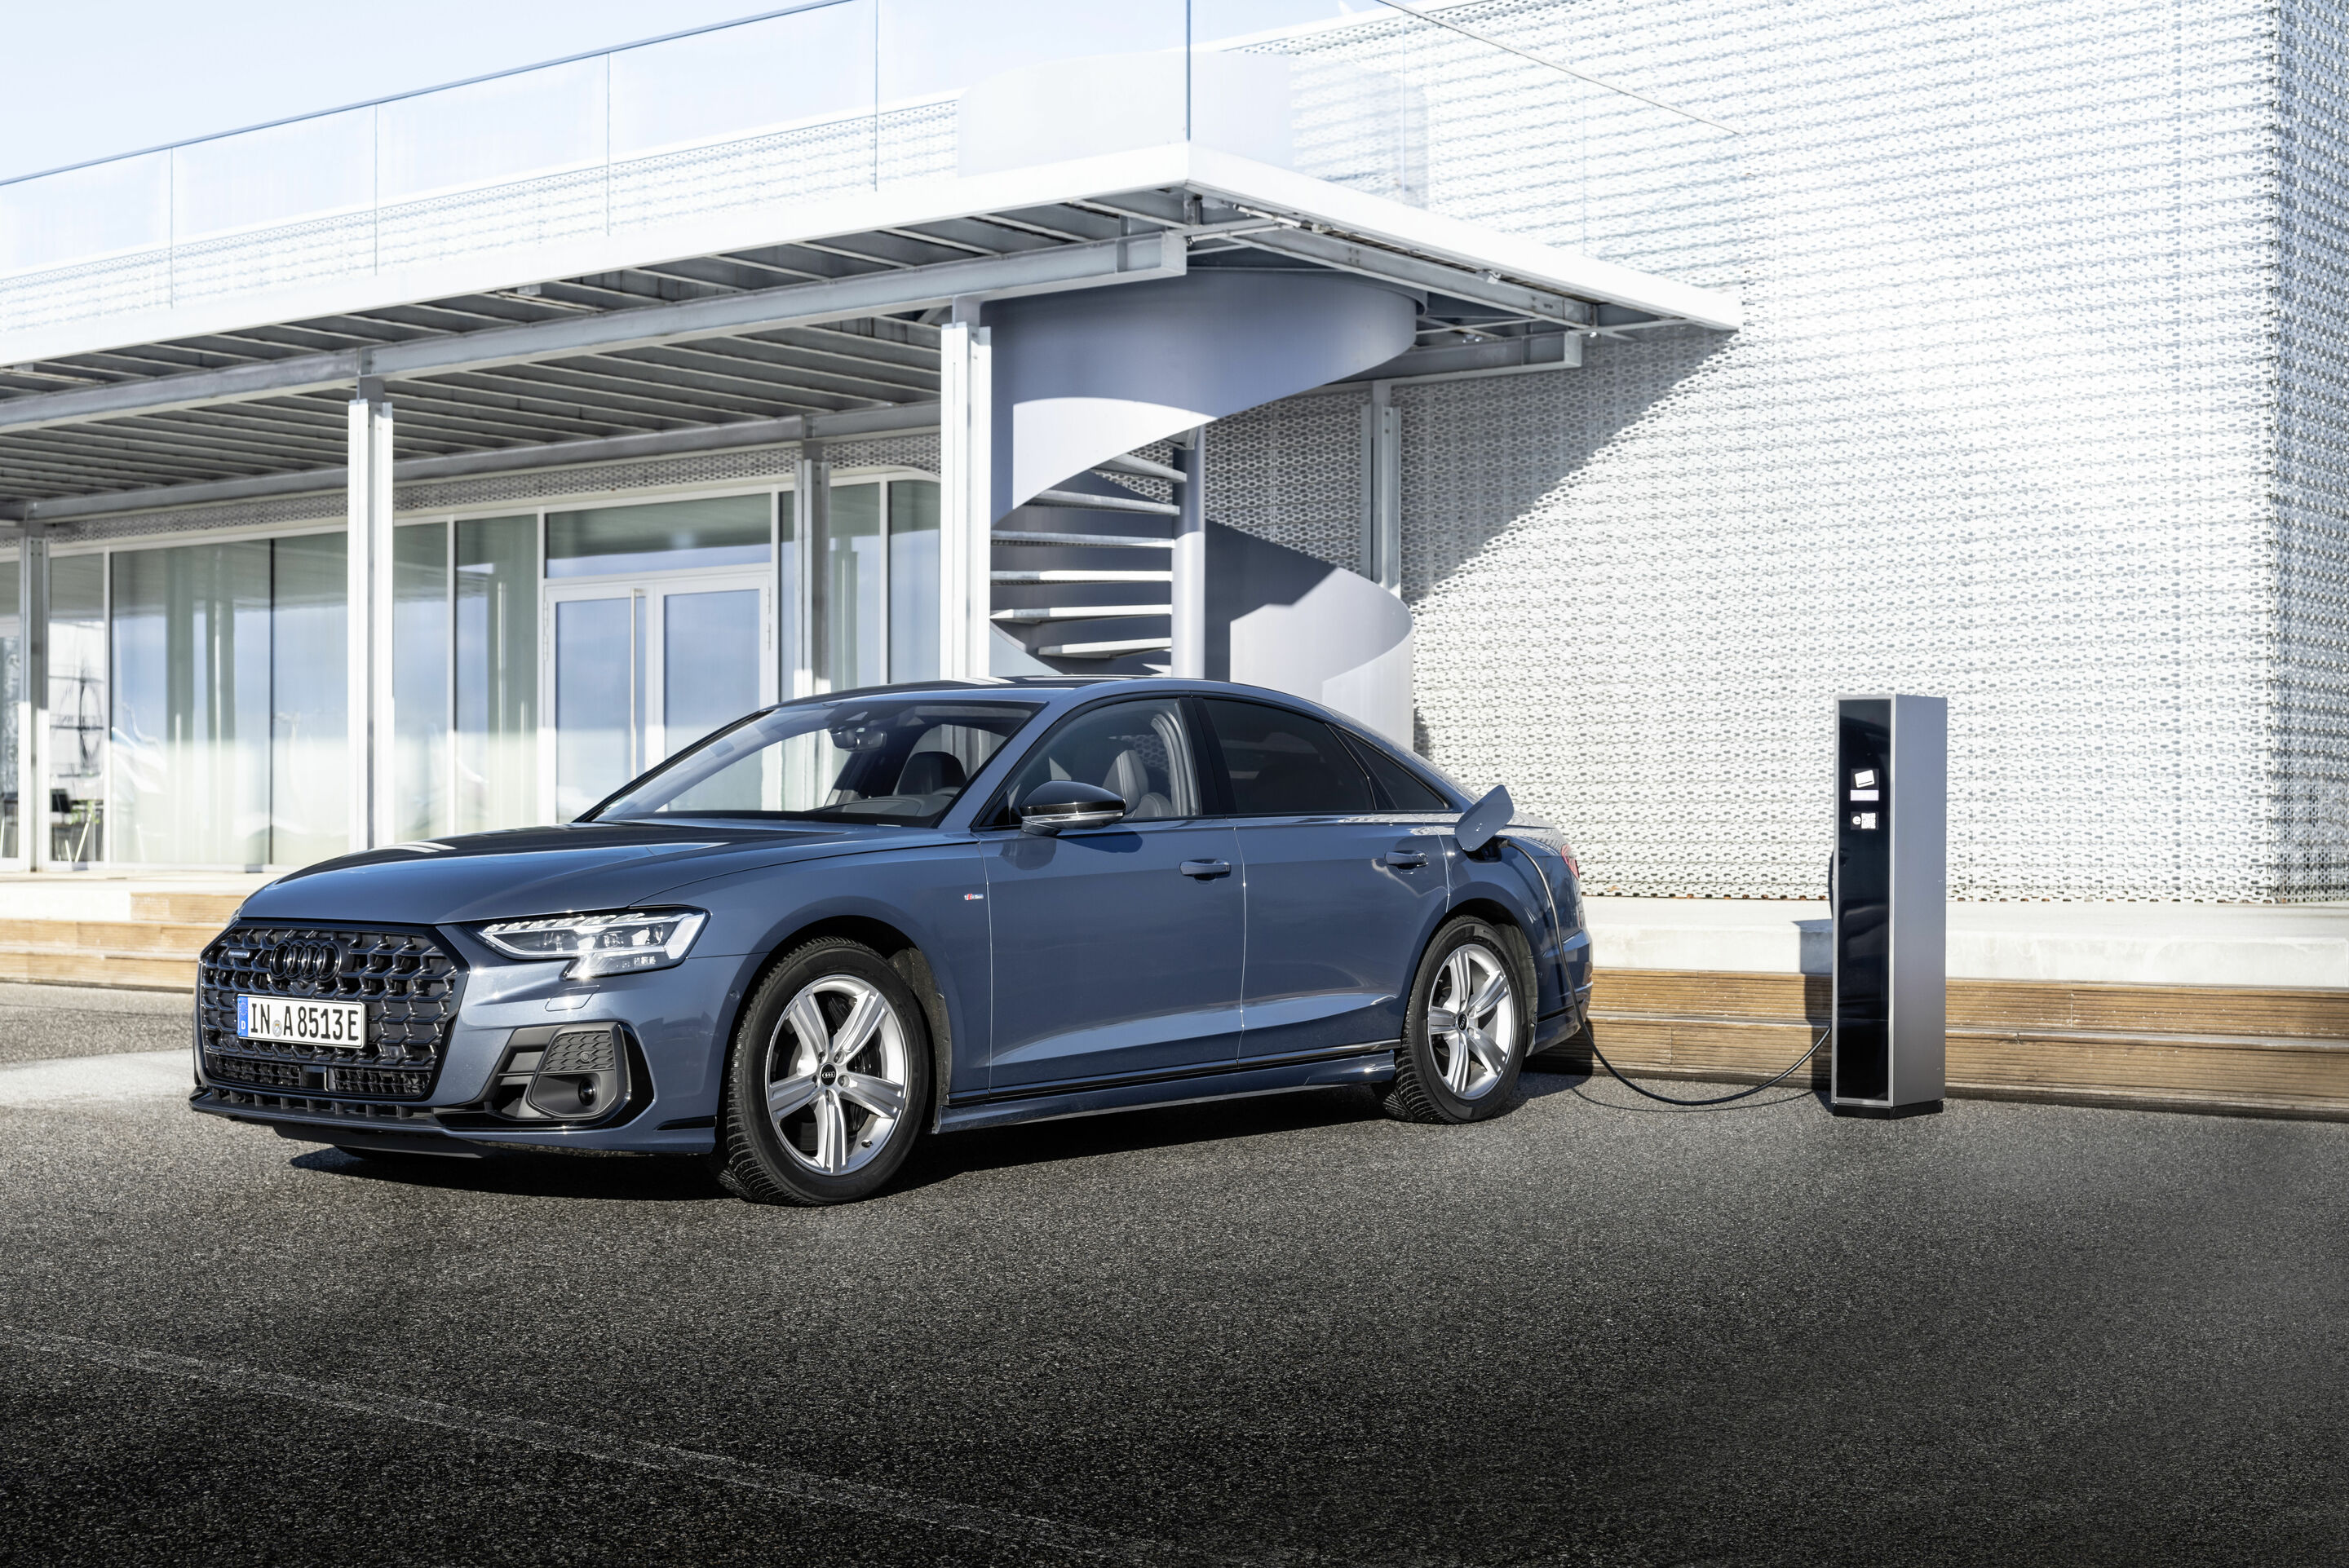 Electrifying full-size sedan: the Audi A6 55 TFSI e quattro